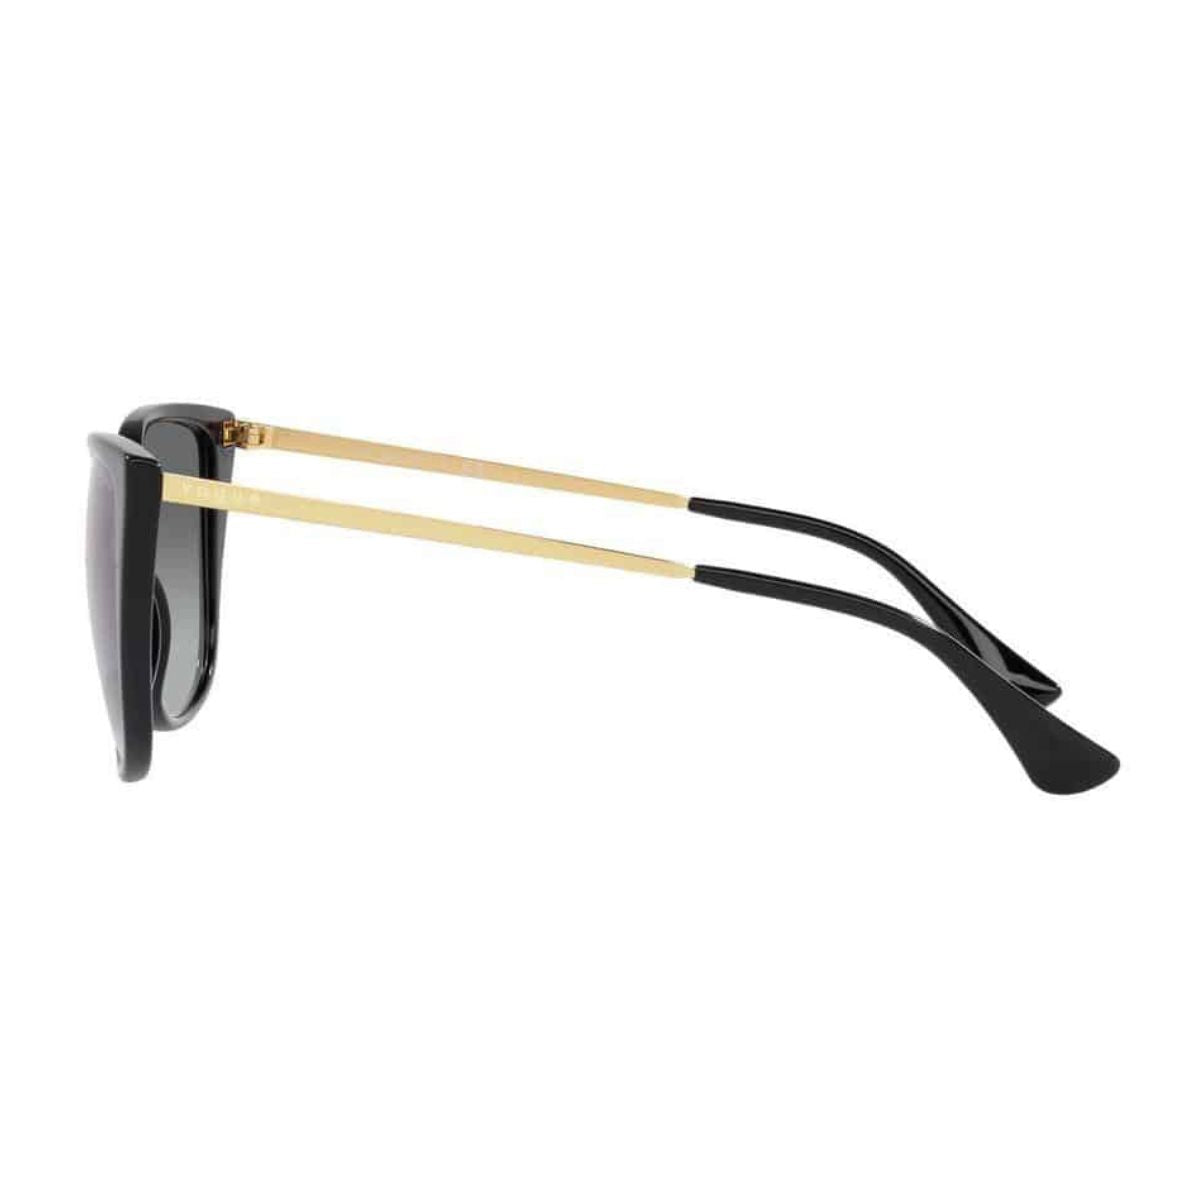 "Stylish Vogue 5535 W44/11 Cat Eye Sunglass For Women's Online At Optorium"